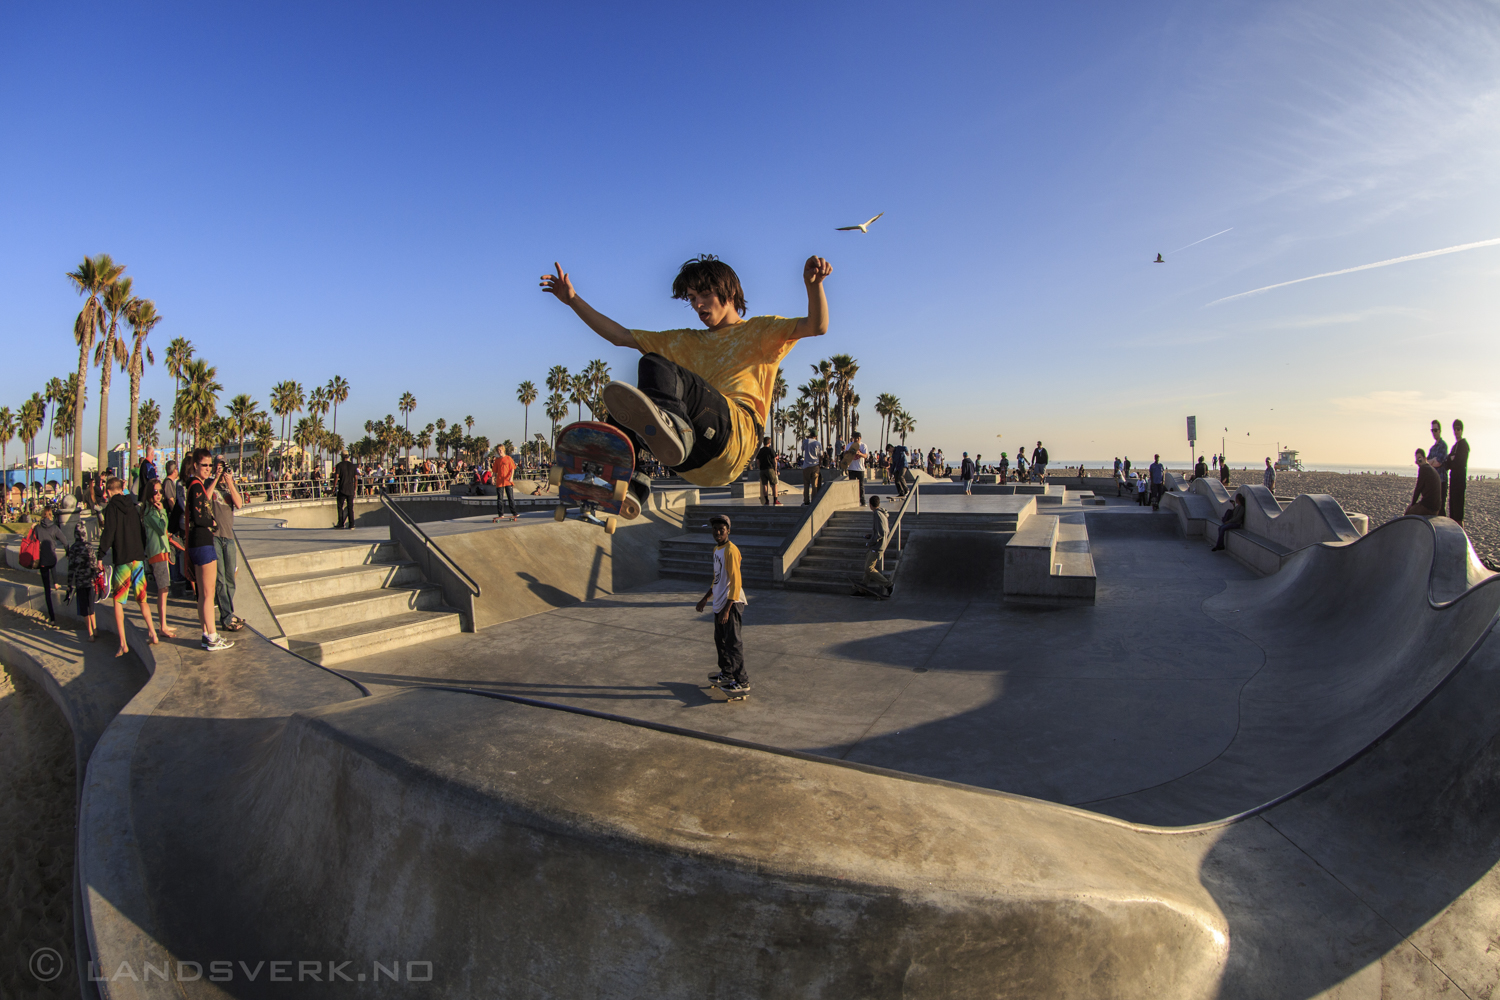 Venice Beach, Los Angeles, California.

(Canon EOS 5D Mark III / Canon EF 8-15mm f/4 L USM Fisheye)